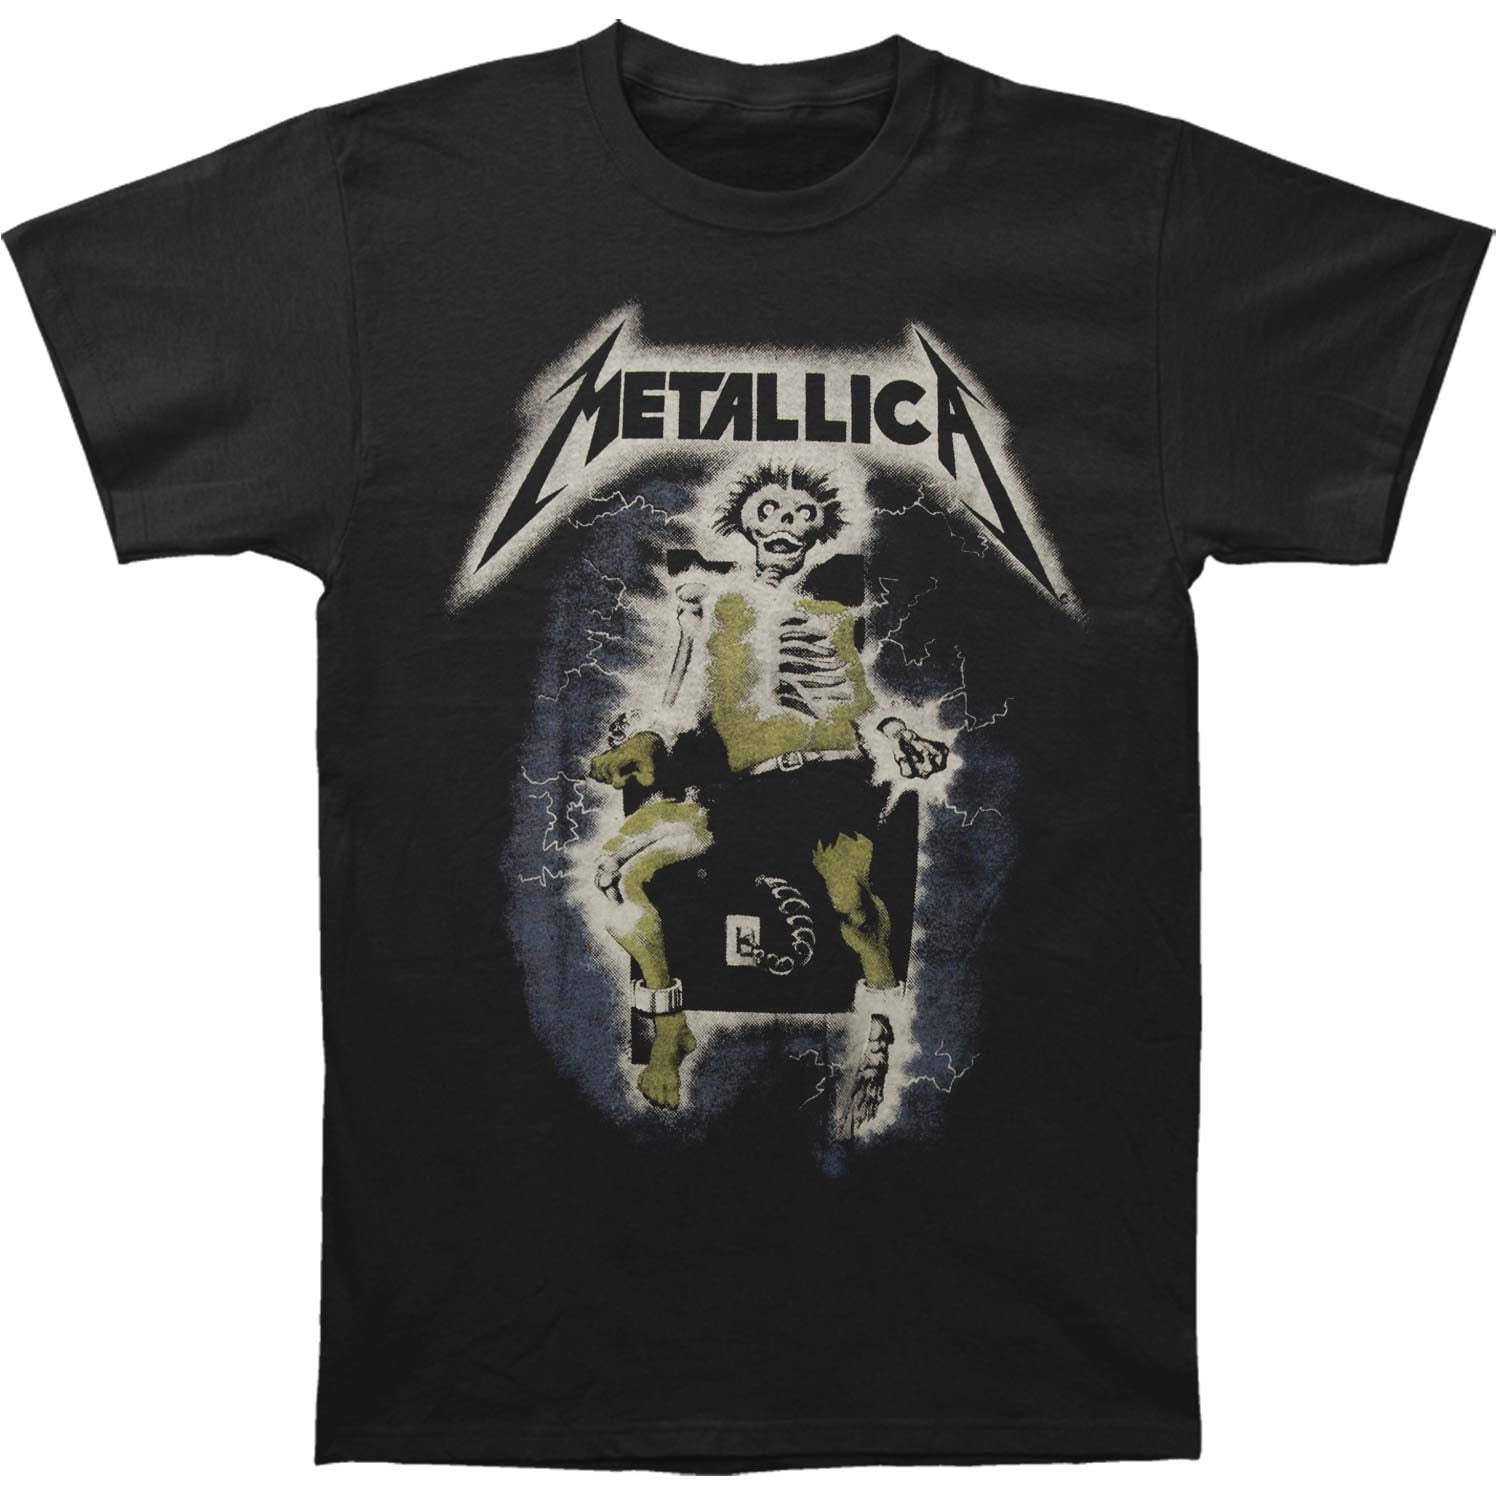 Metallica - Metallica Men's Electric Chair T-shirt Black - Walmart.com ...